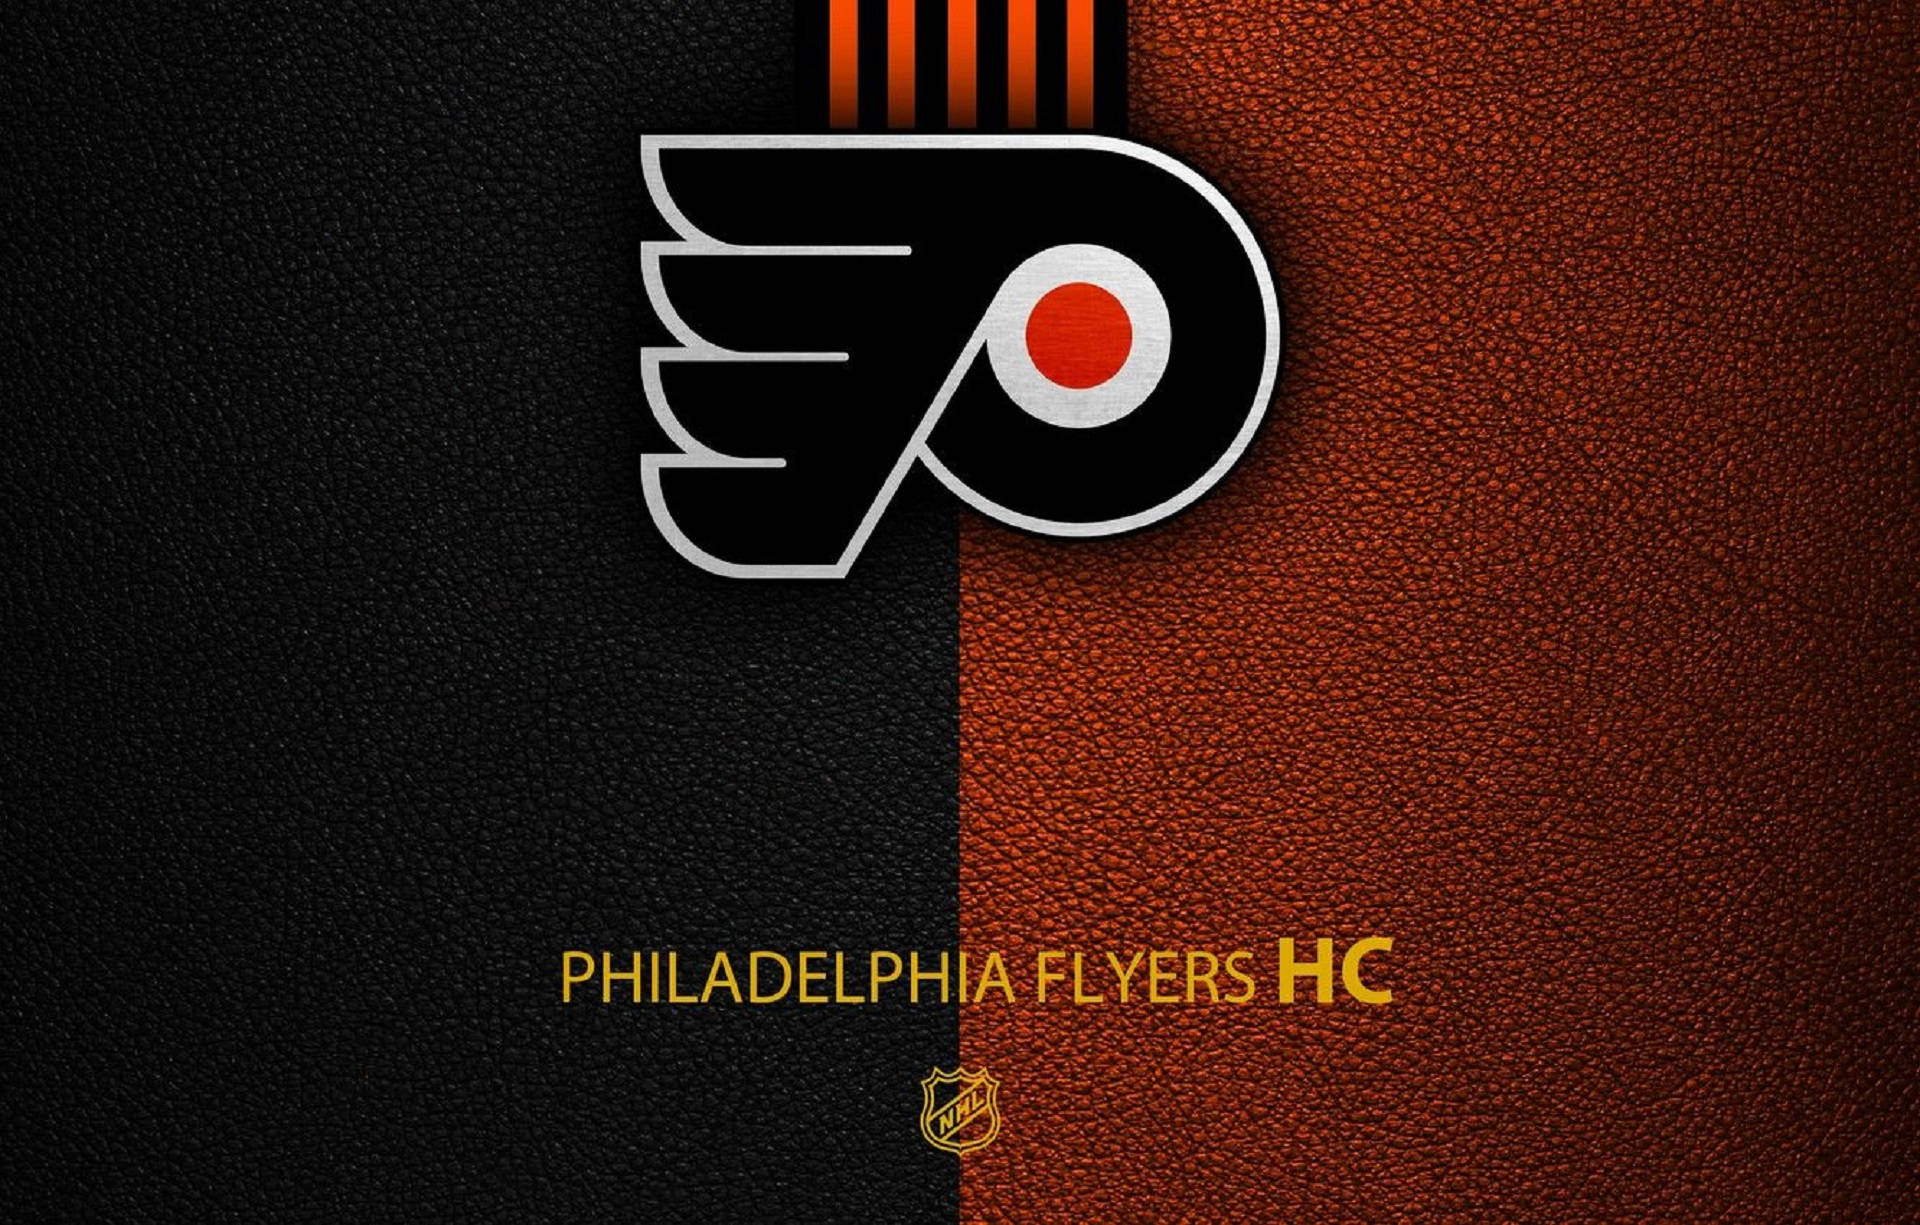 Philadelphia Flyers Logo On Leather Background